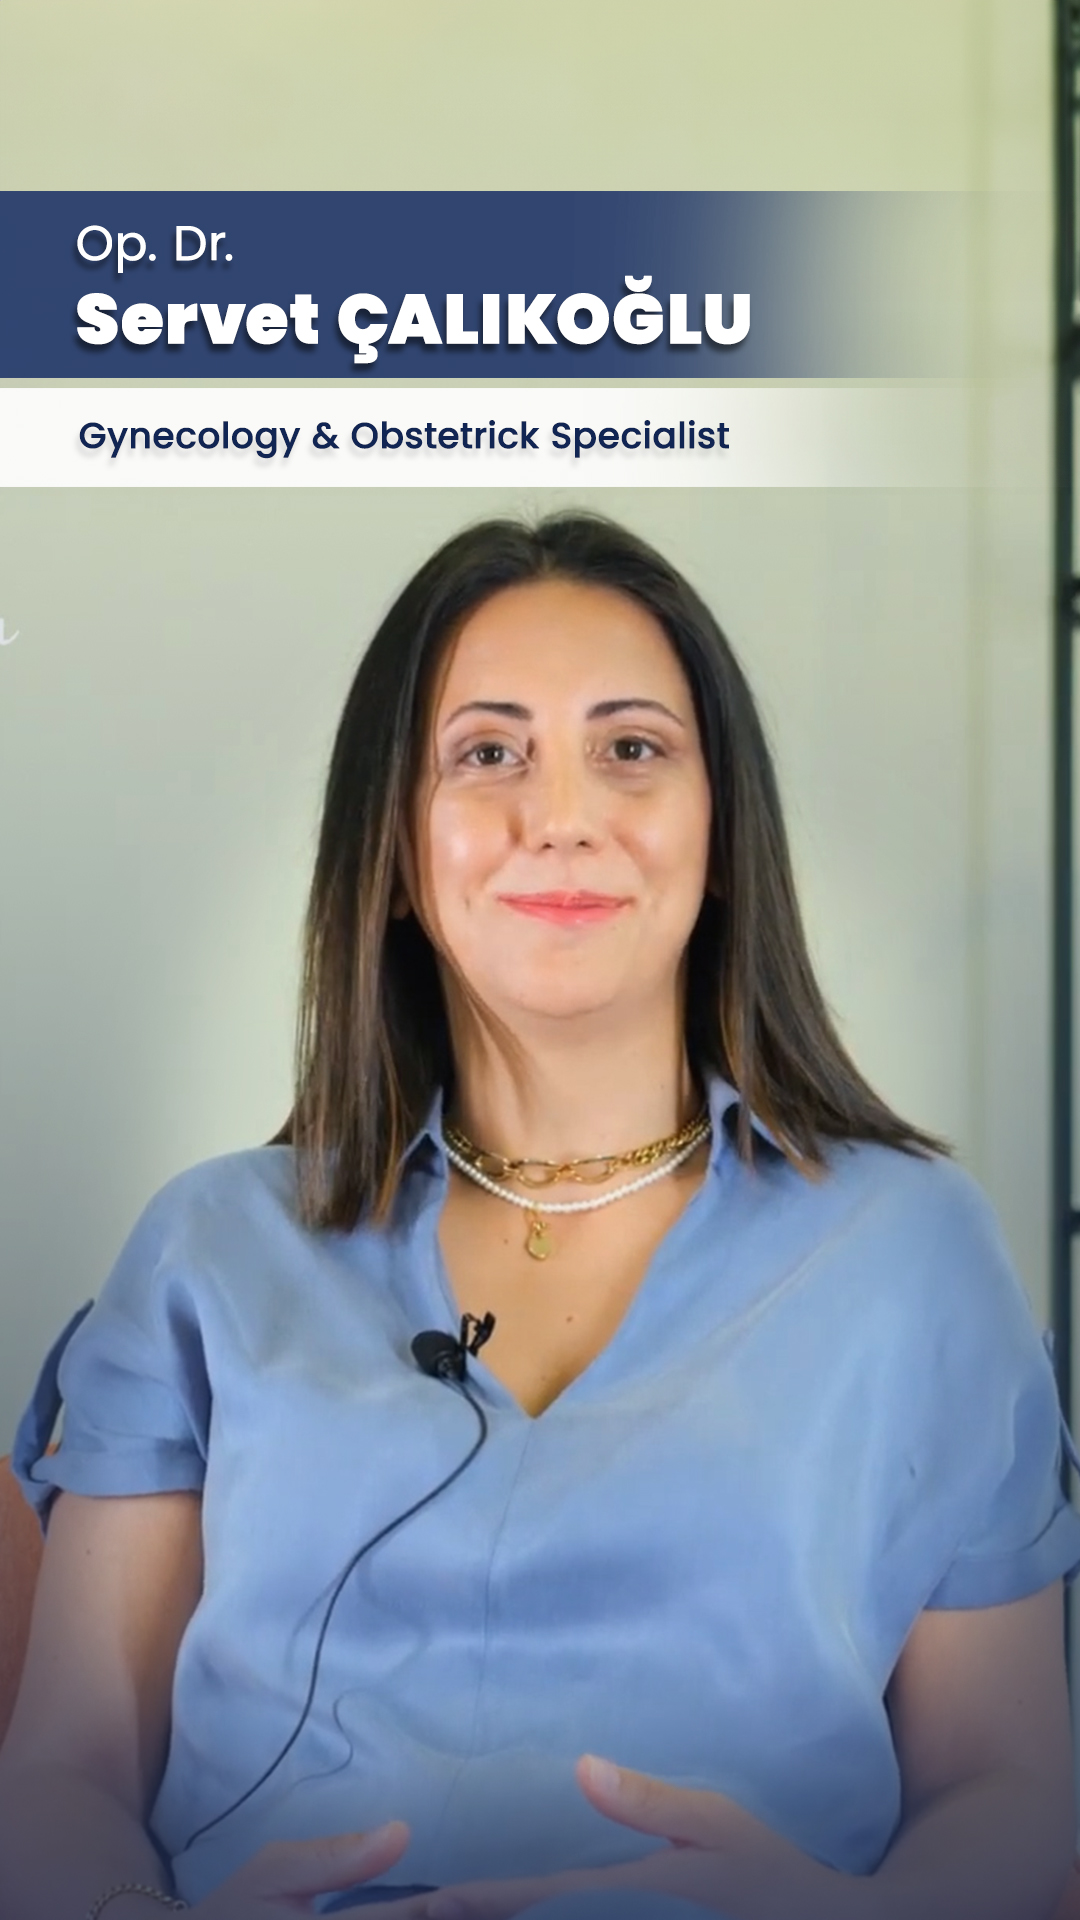 Op. Dr. Servet ÇALIKOĞLU - Gynecology & Obstetrick Specialist